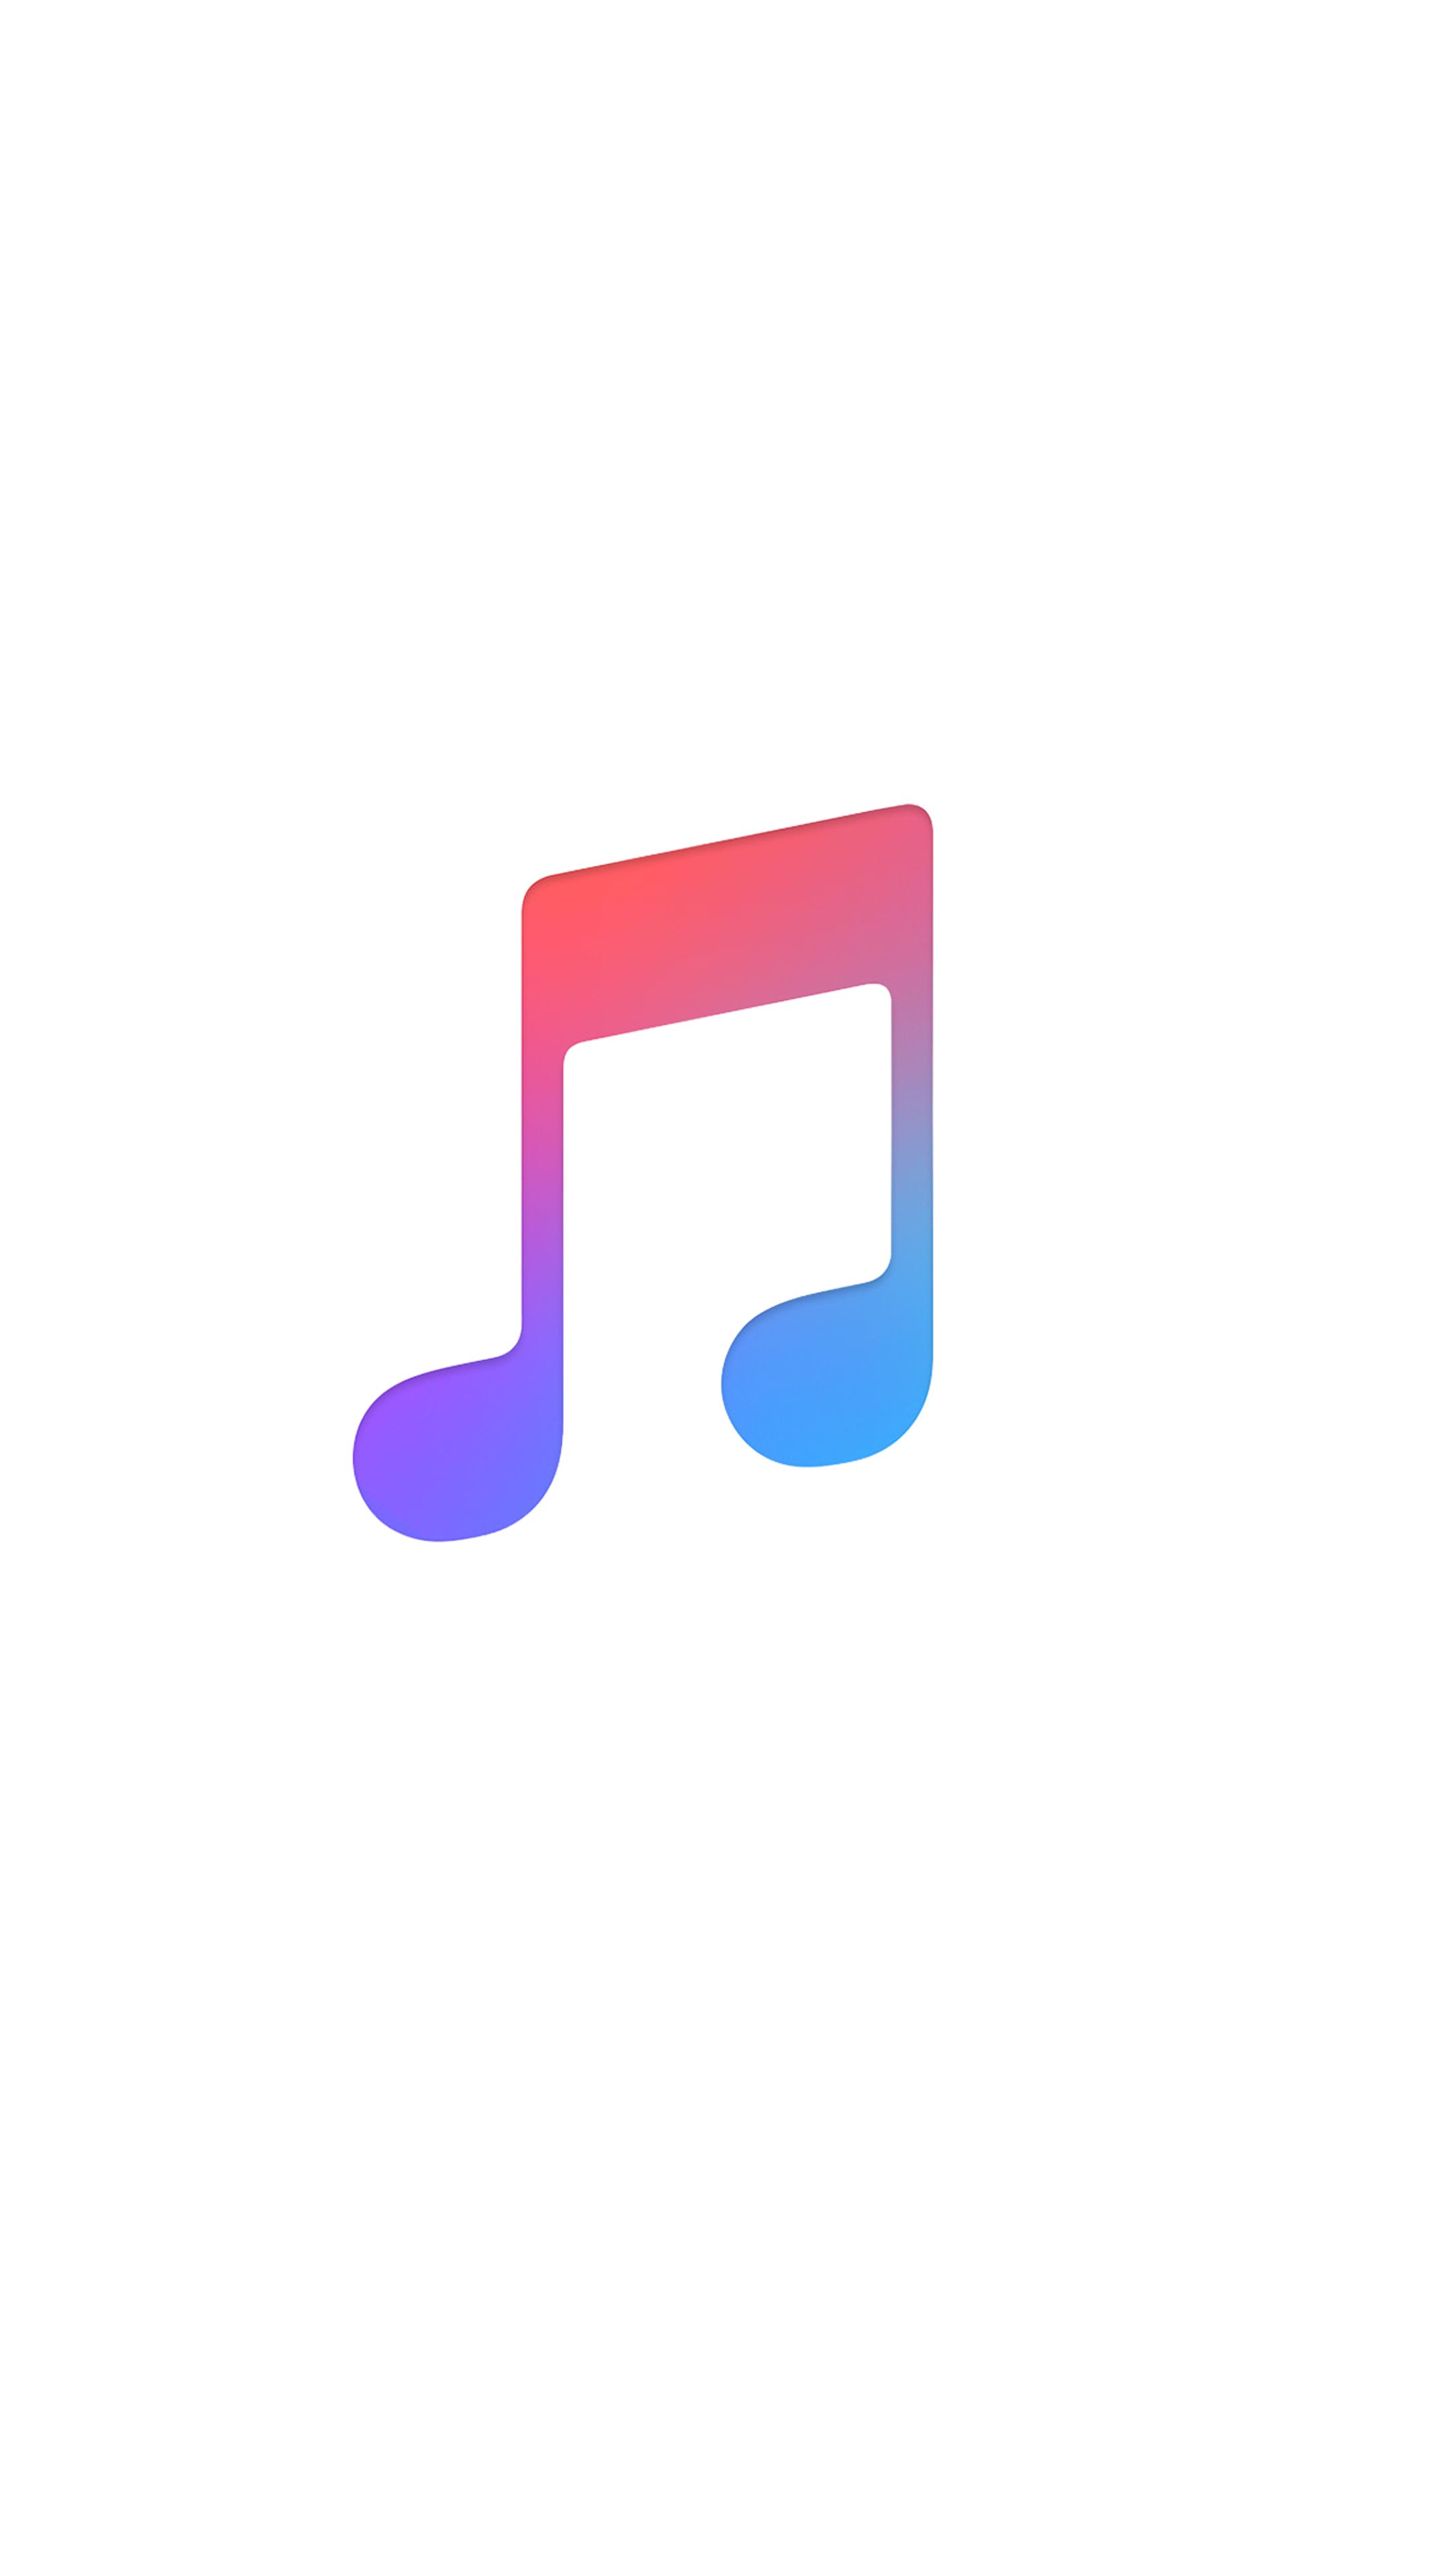 Apple music logo wallpaper. Music logo, Wallpaper iphone neon, Apple logo wallpaper